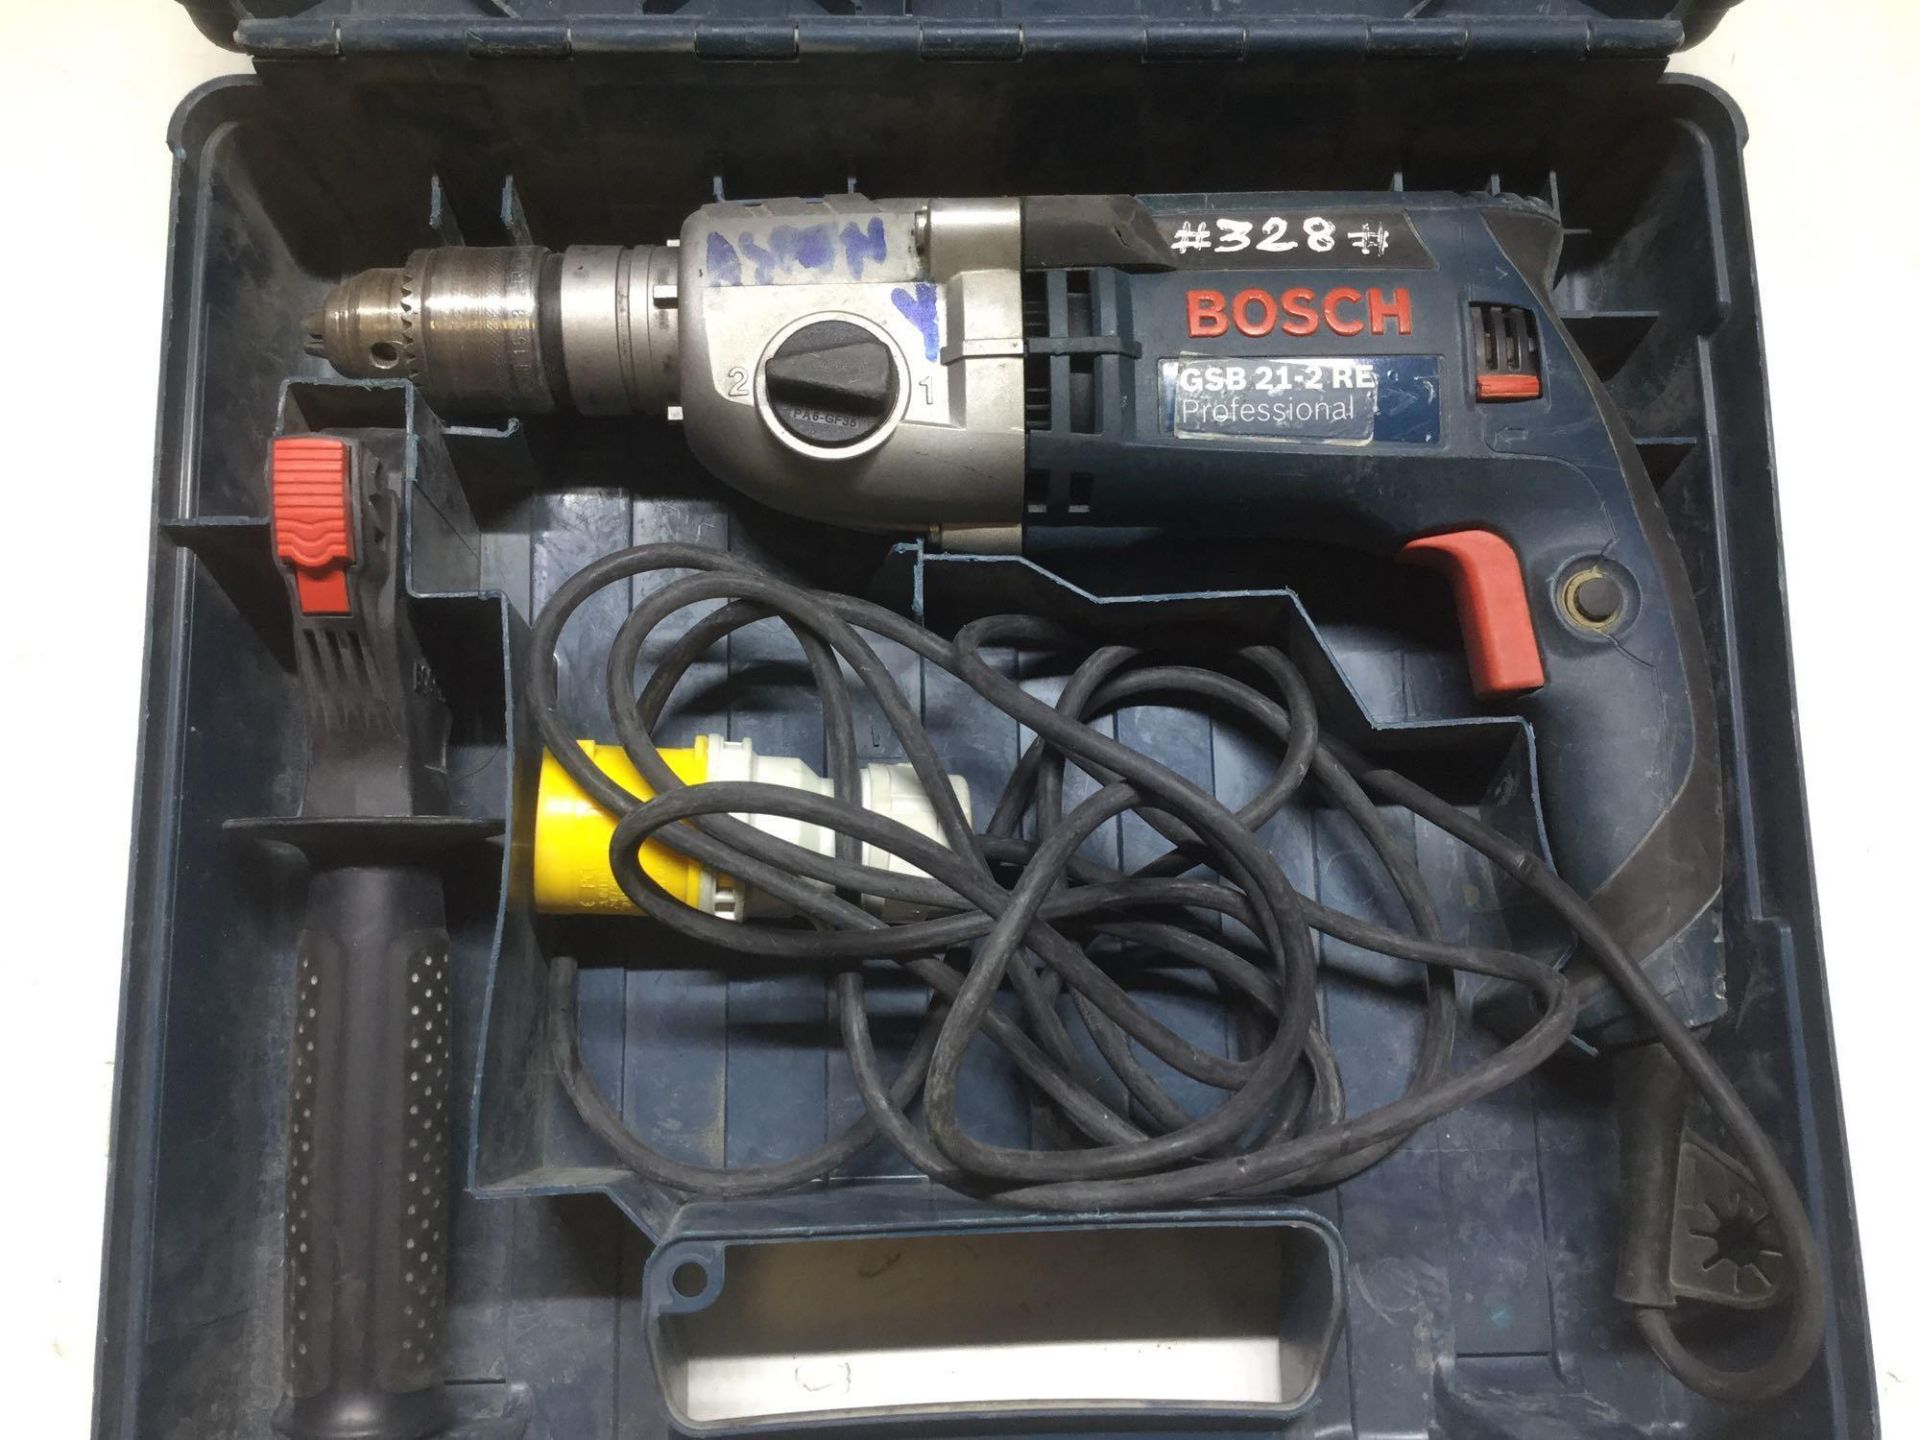 Bosch GSB 21-2 RE Hammer Drill 110v Boxed - Image 2 of 4